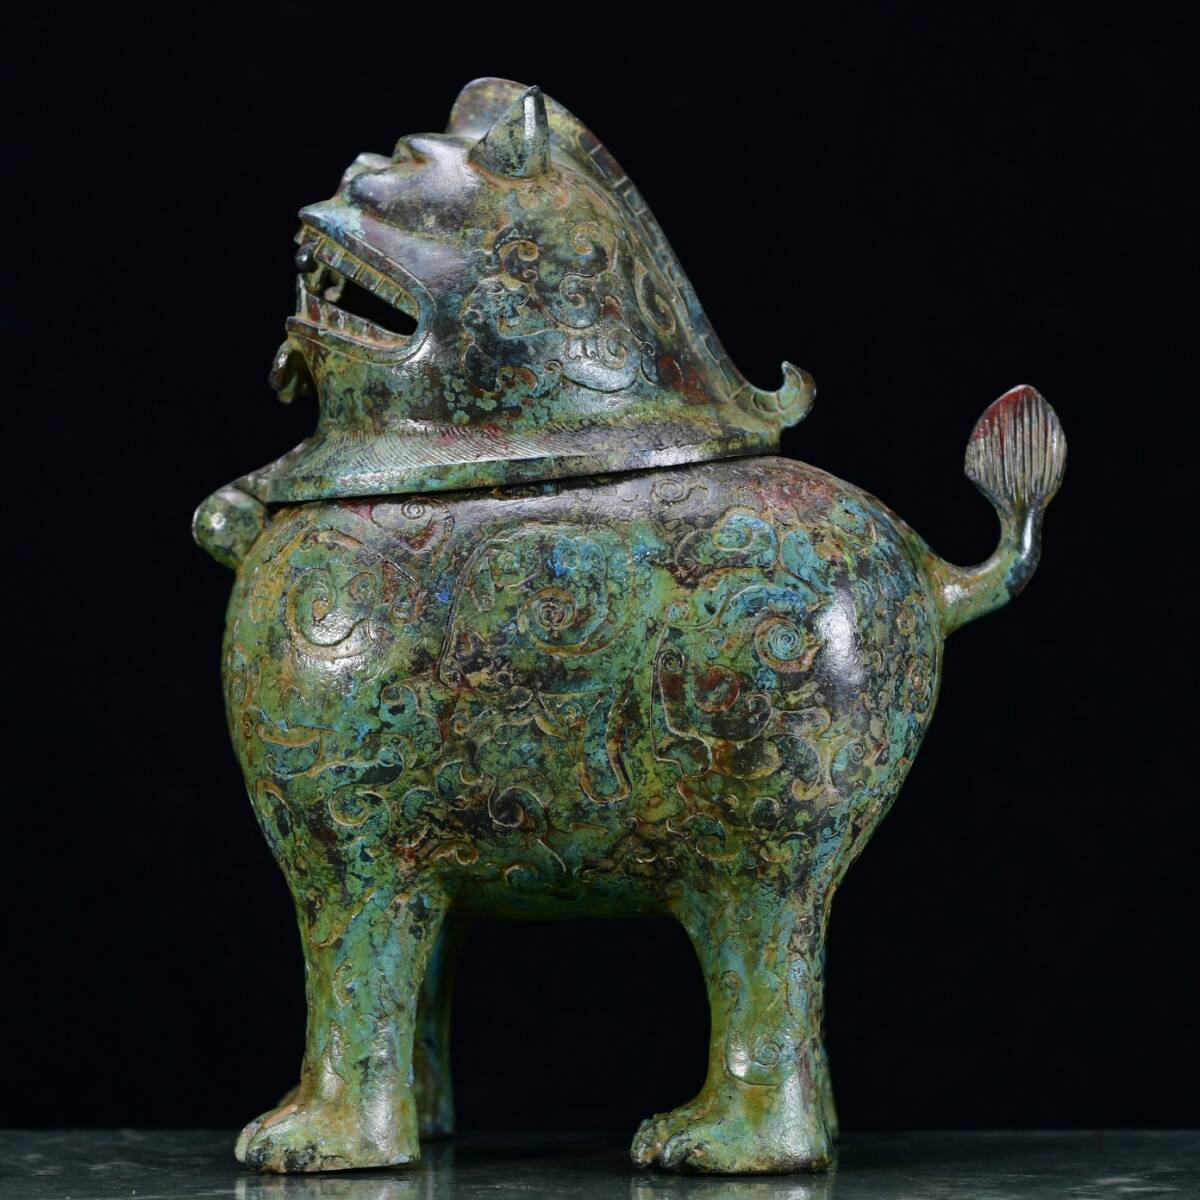 旧藏 青銅器 中国漢代の青銅獣尊です 時代物 中國古美術 極細工 擺件 置物 賞物 唐物 古美術品 DYW68_画像1